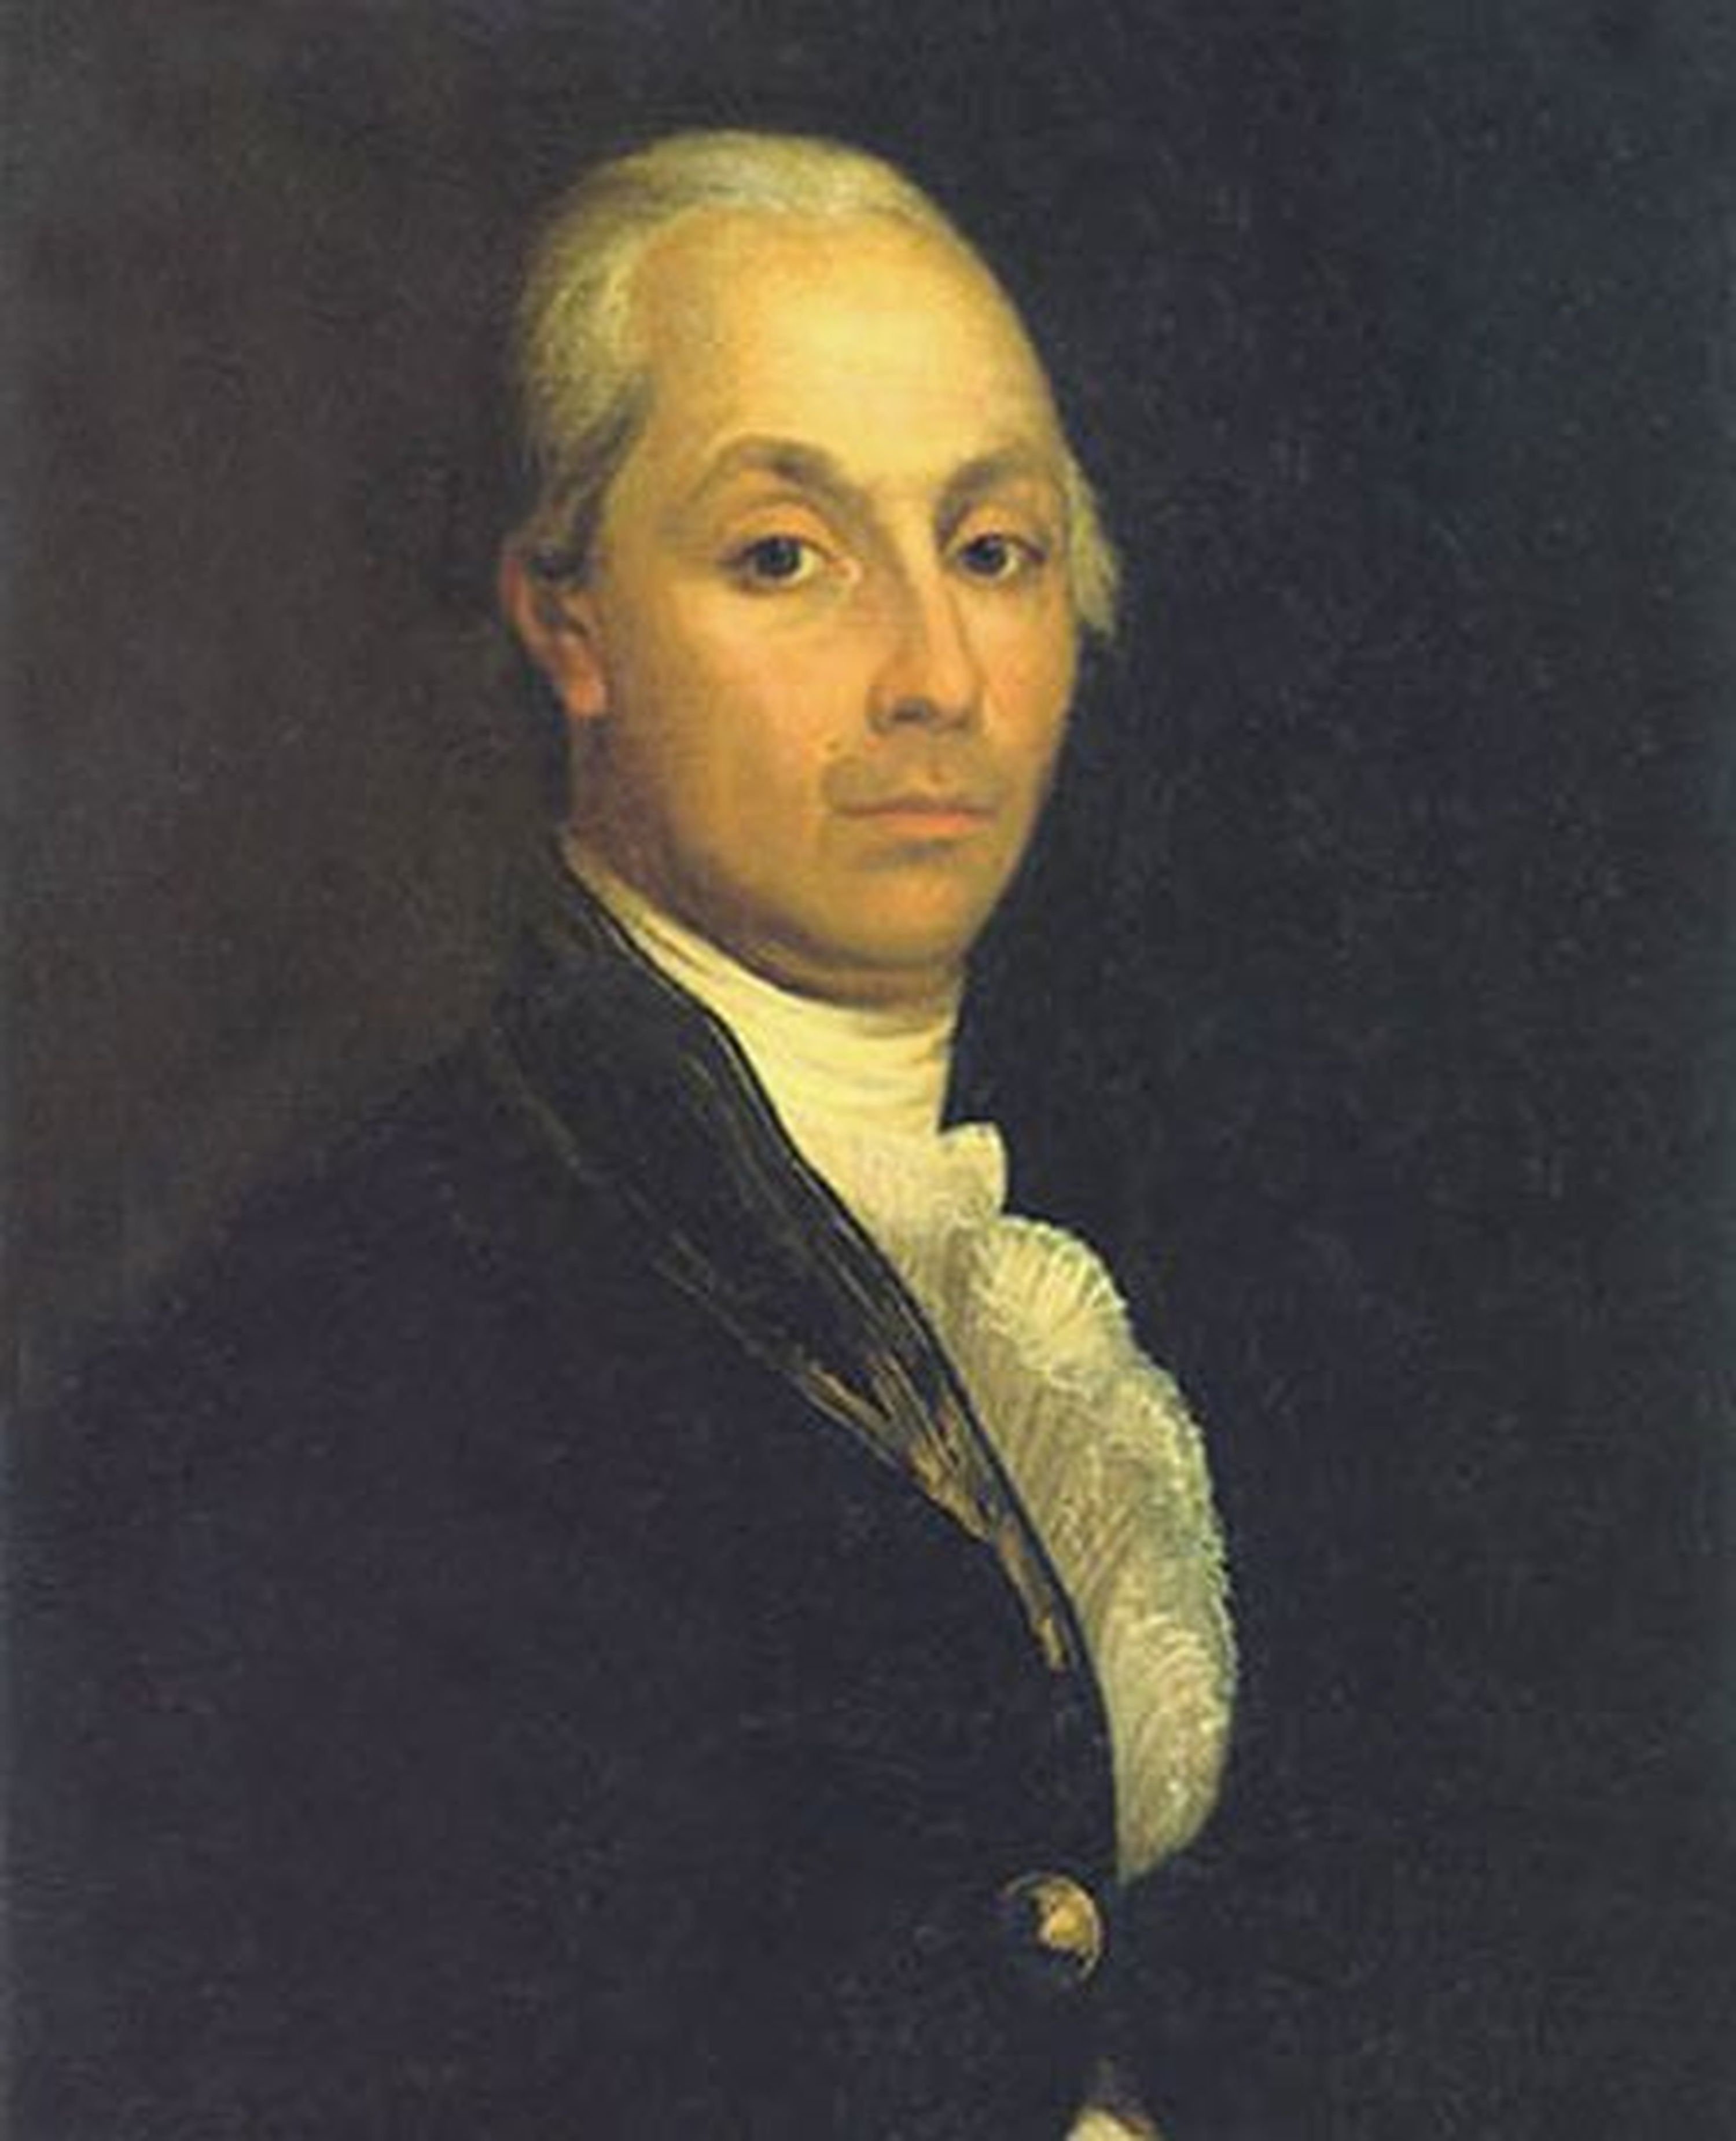 Ода 18 век. А.Н. Радищев (1749-1802).